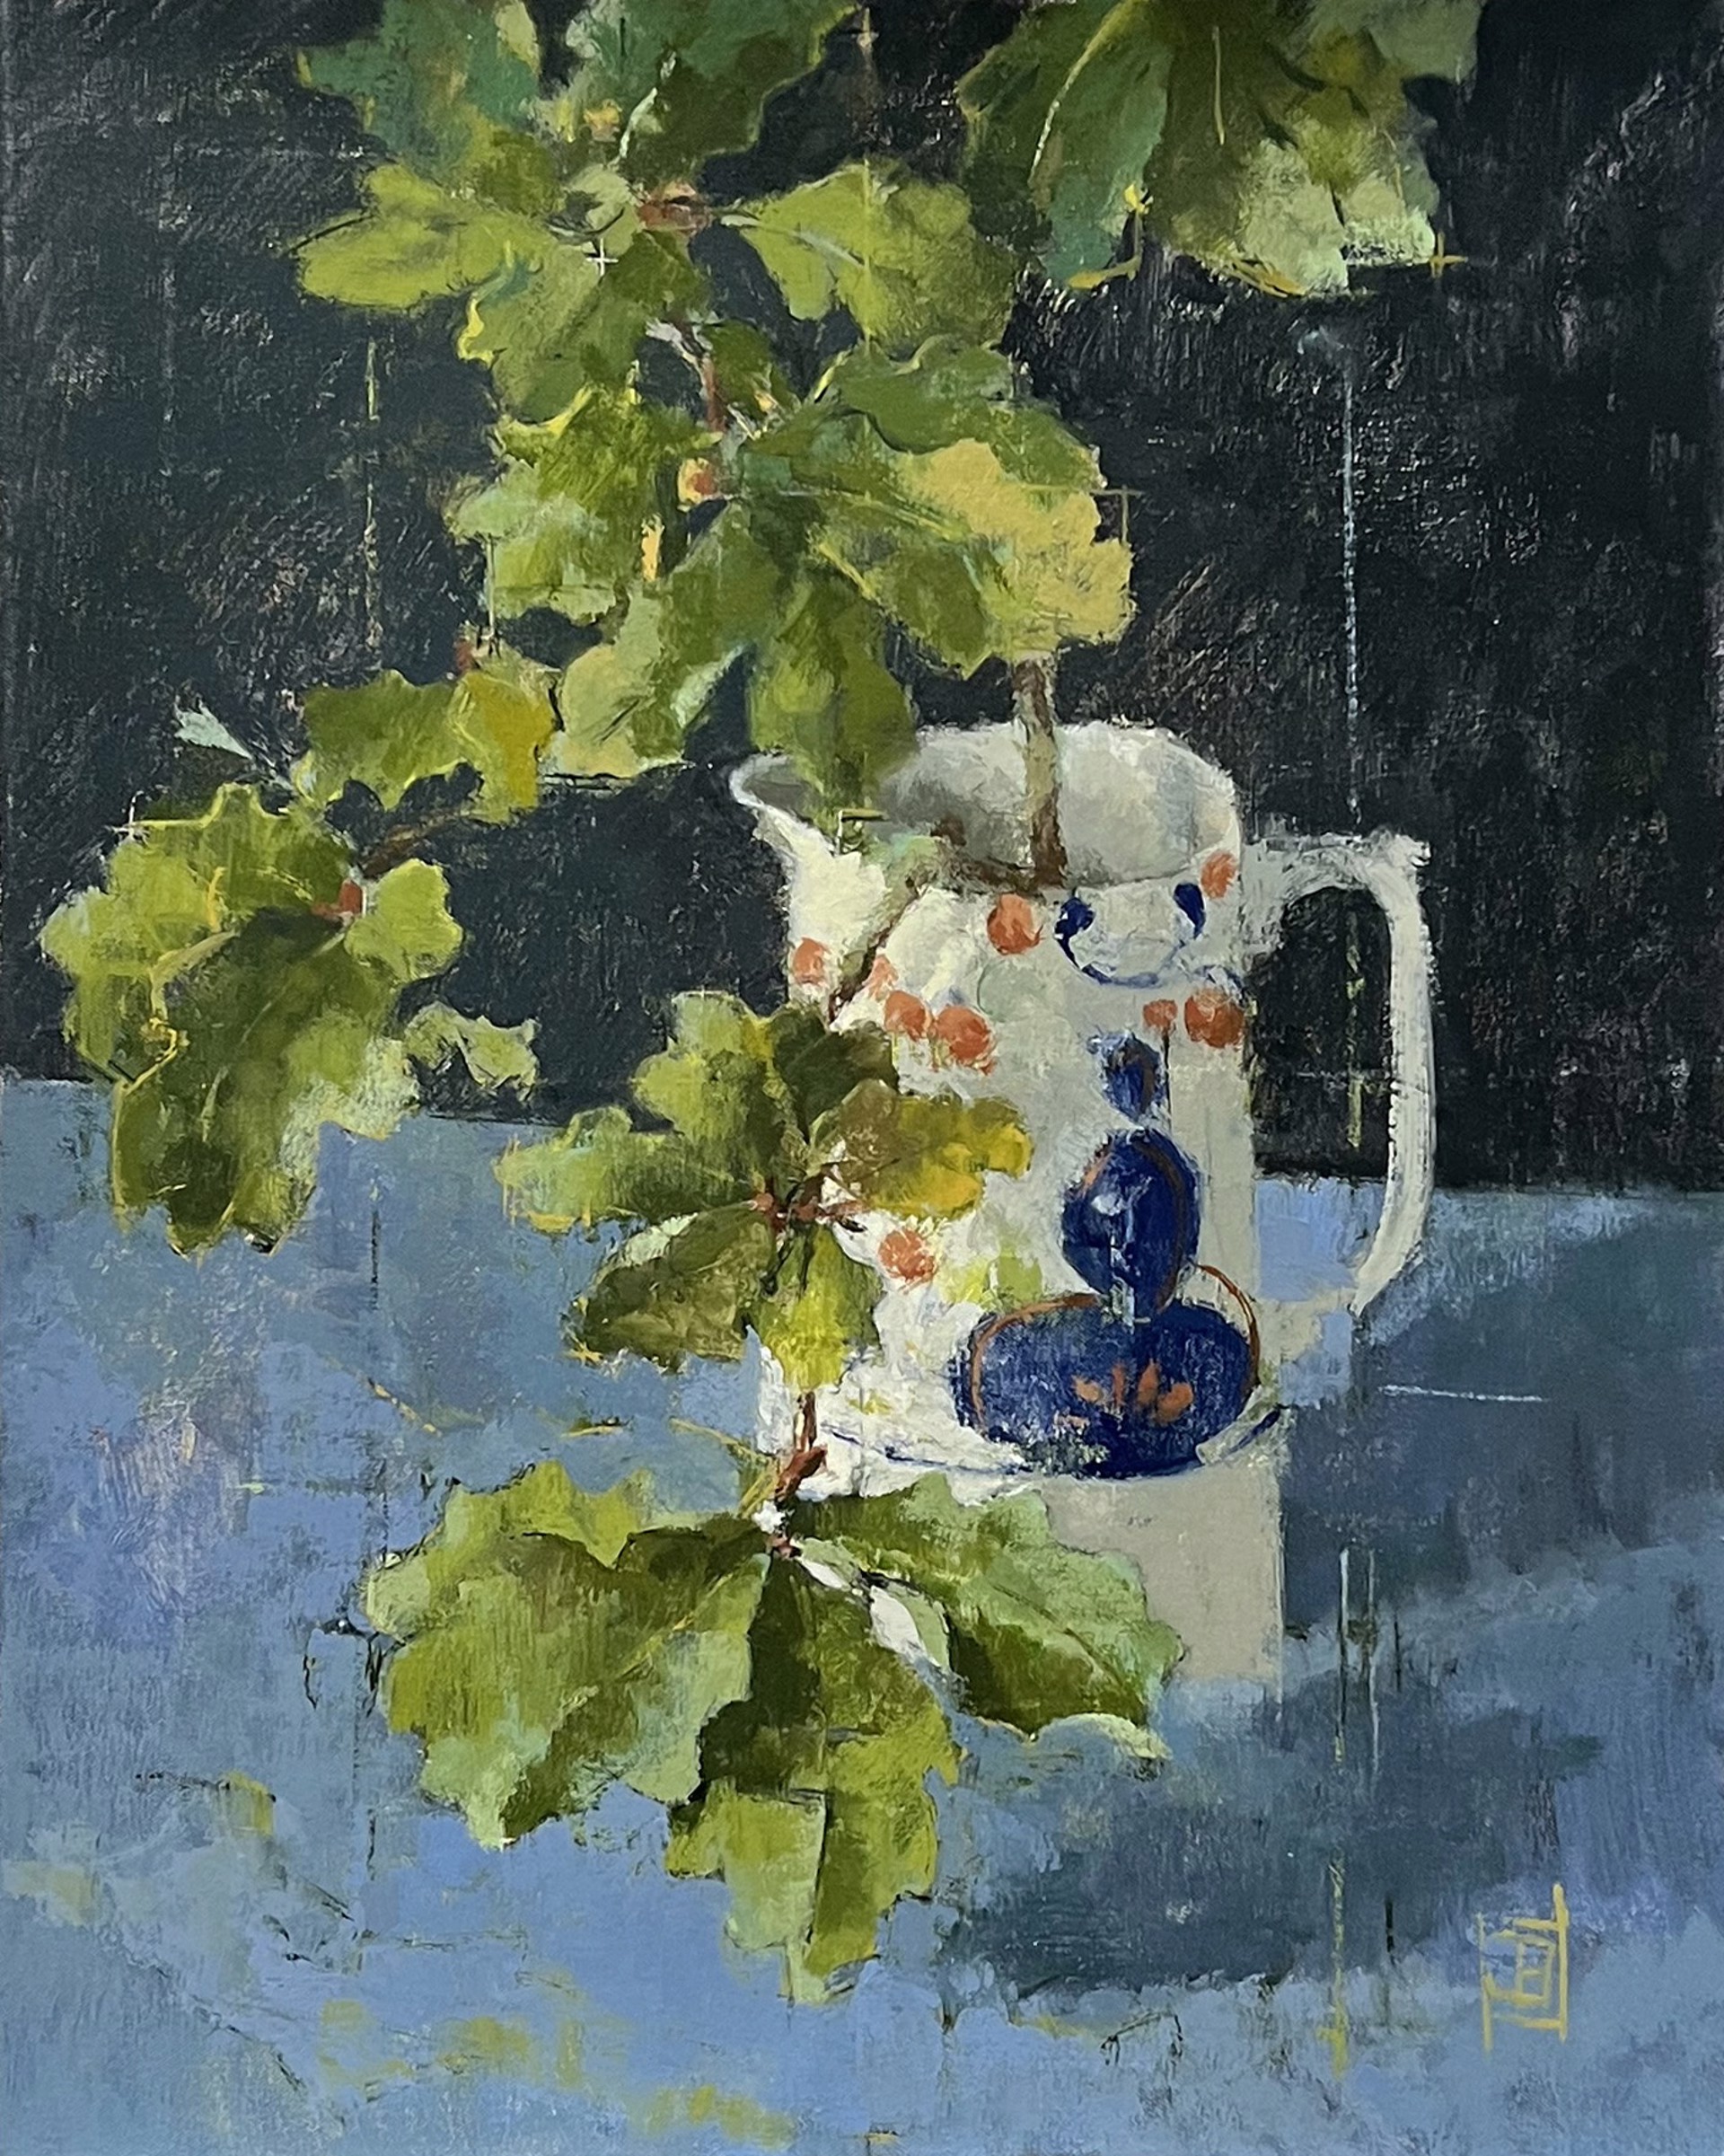 Gaudy Jug with Oak Leaves by Jill Barthorpe